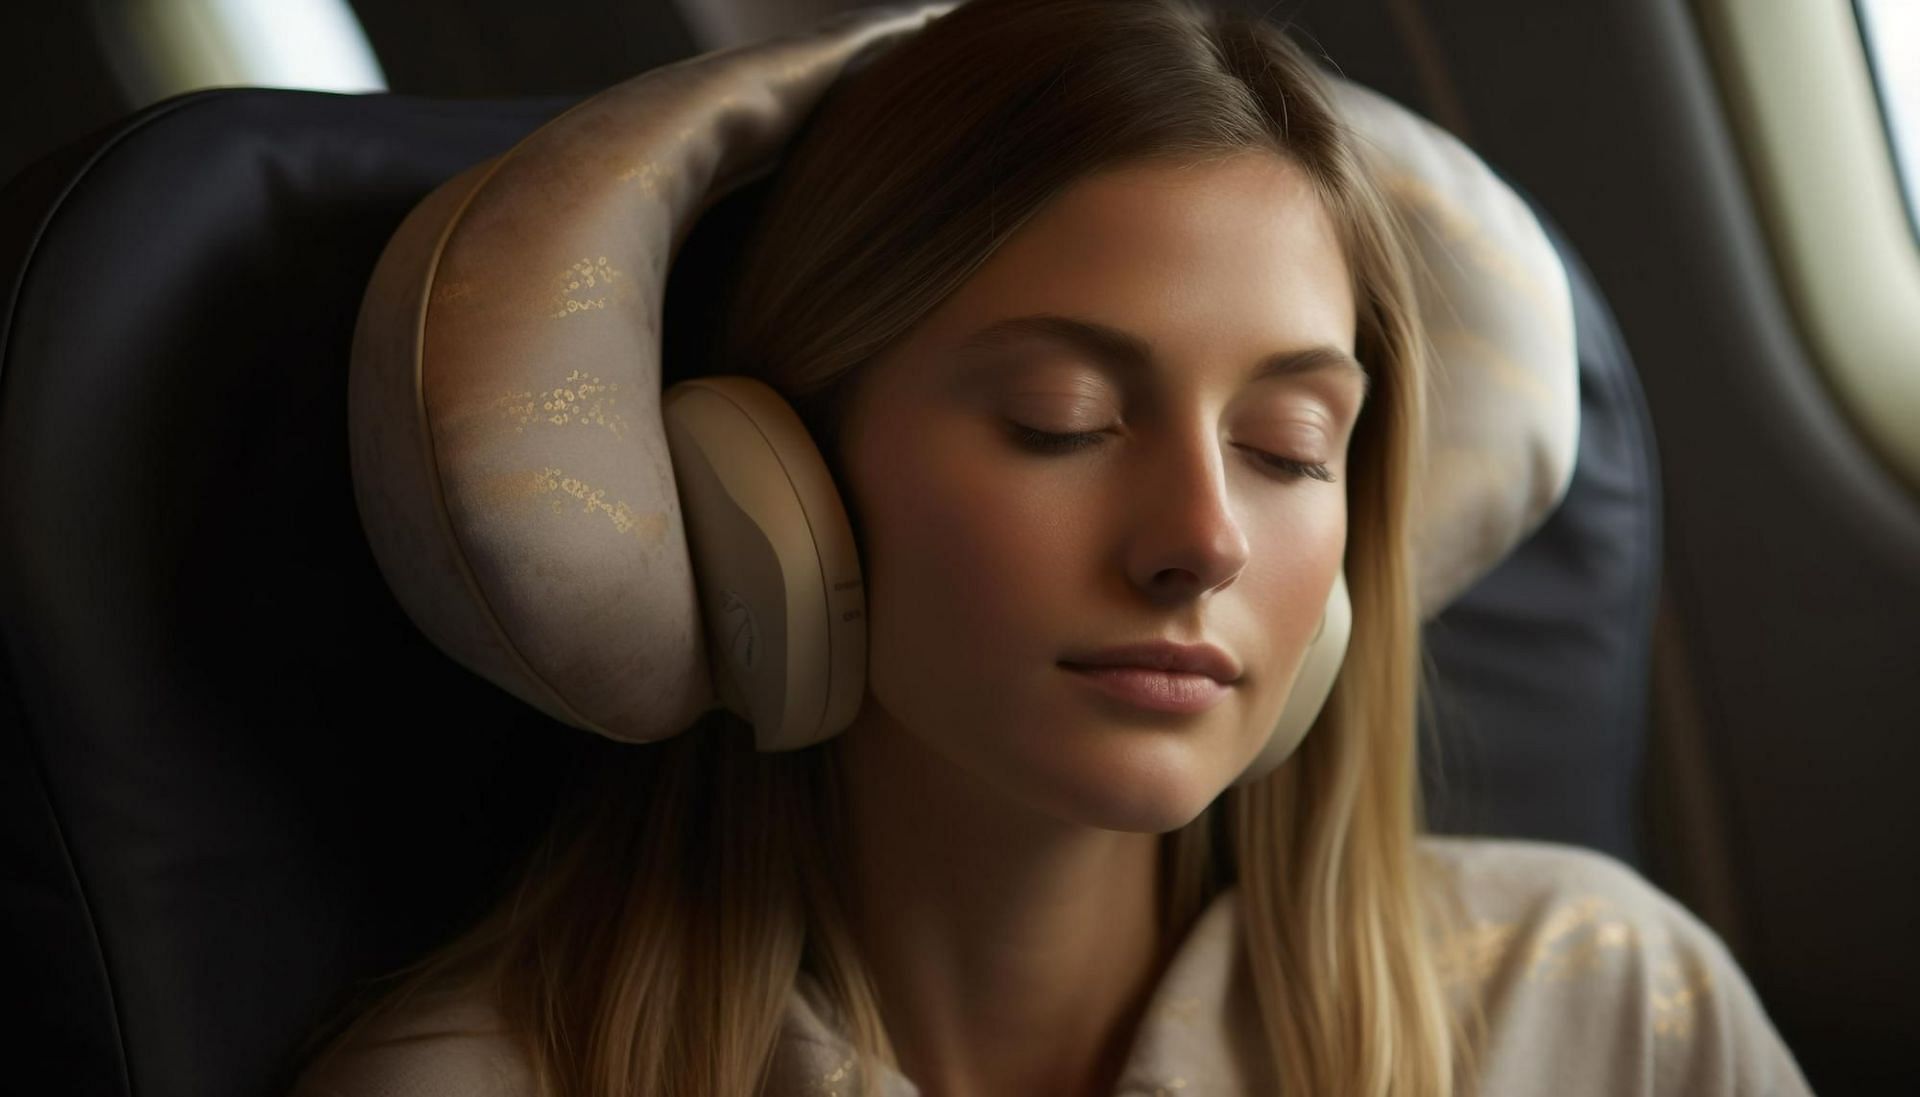 Sleeping with earplugs (Image via vecstock on Freepik)